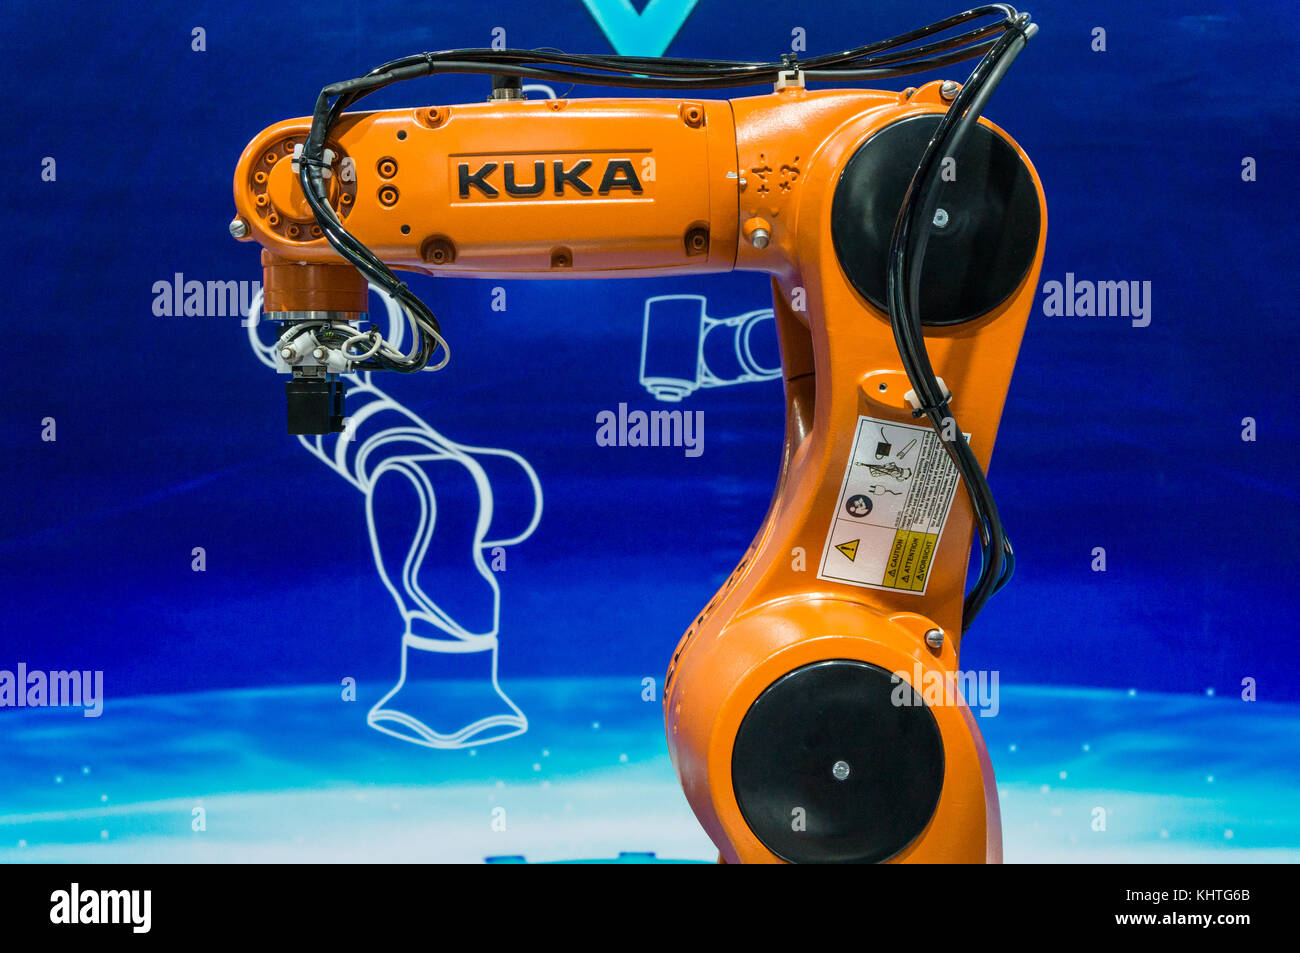 Kuka industrial robot orange, side view Stock Photo